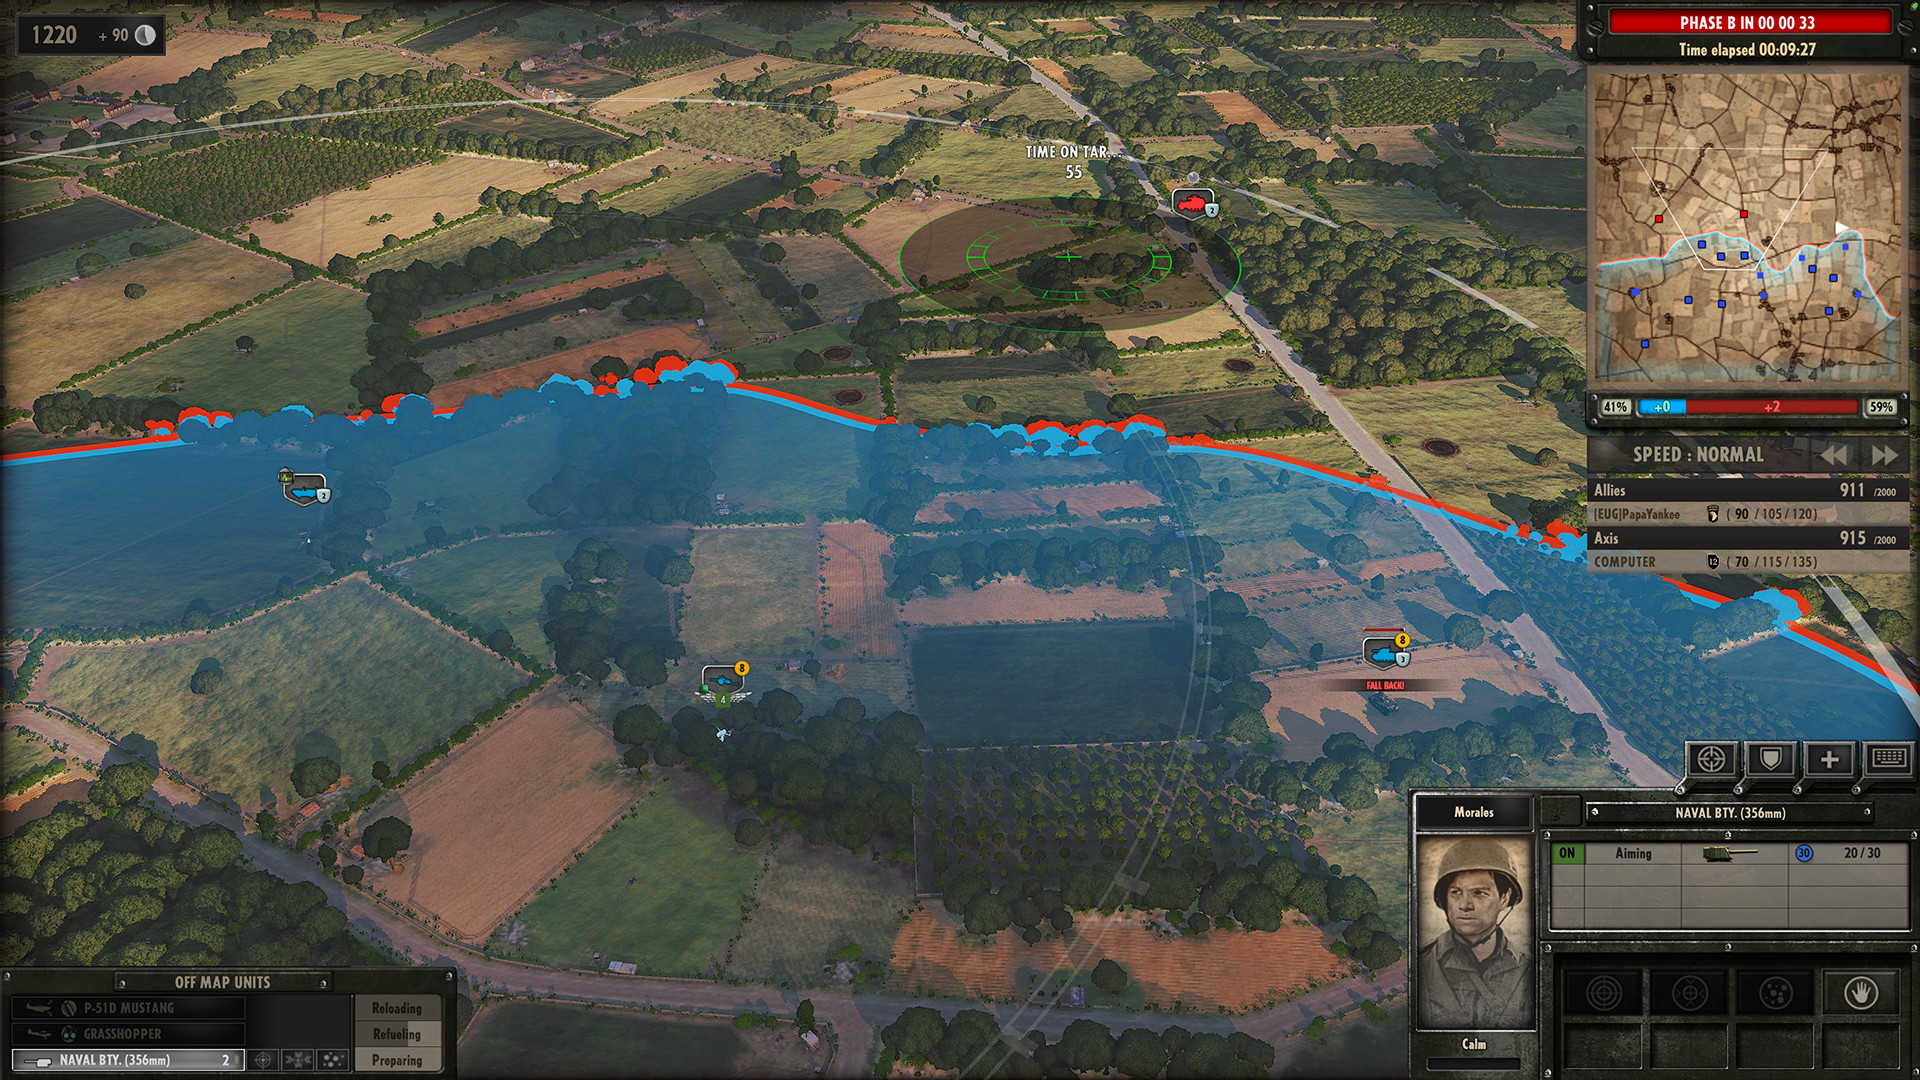 Steel Division: Normandy 44 - screenshot 1